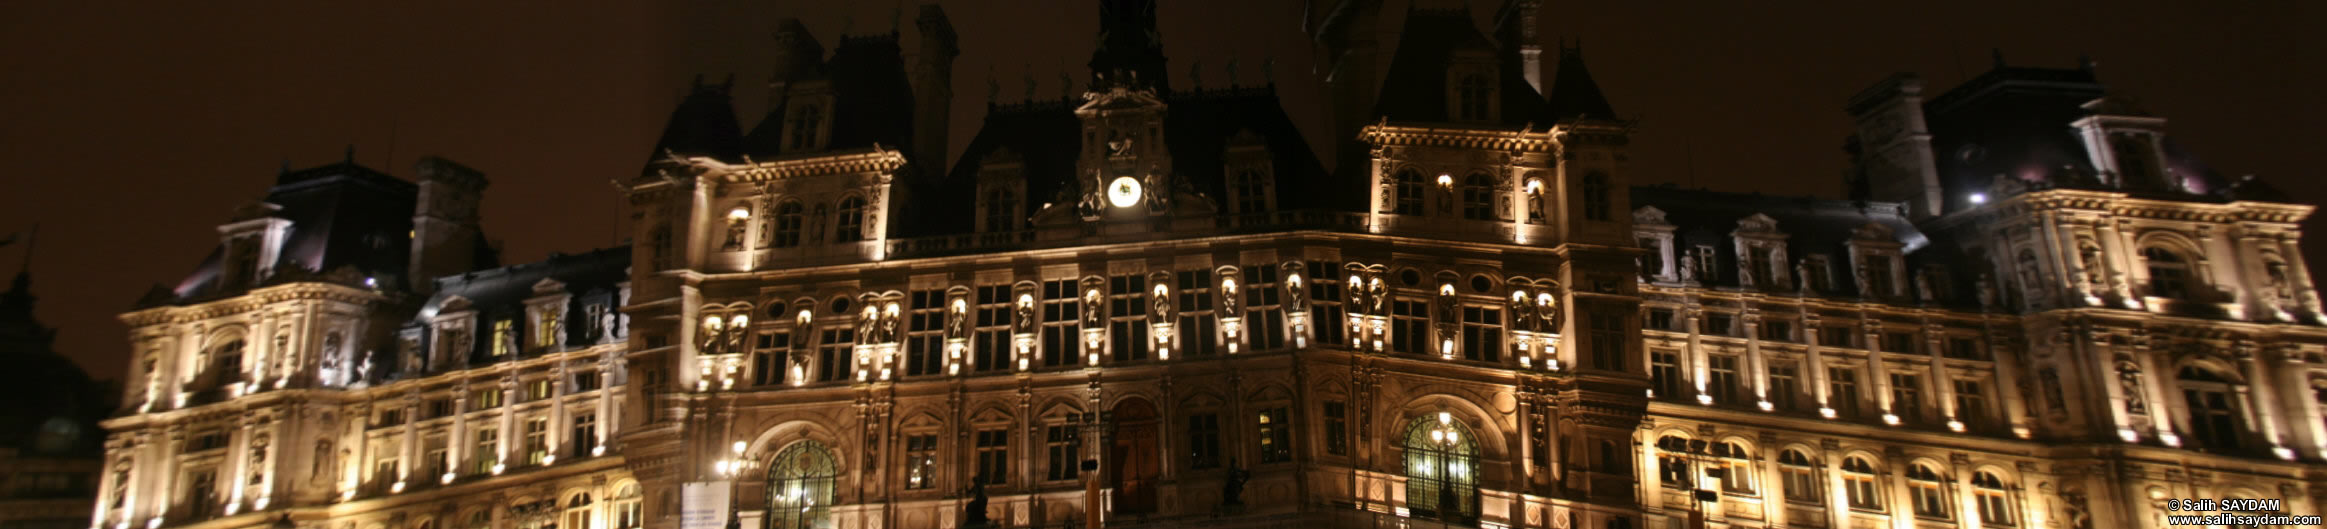 City Hall of Paris (Hôtel de Ville) Panorama 2 (At Night) (Paris, France)